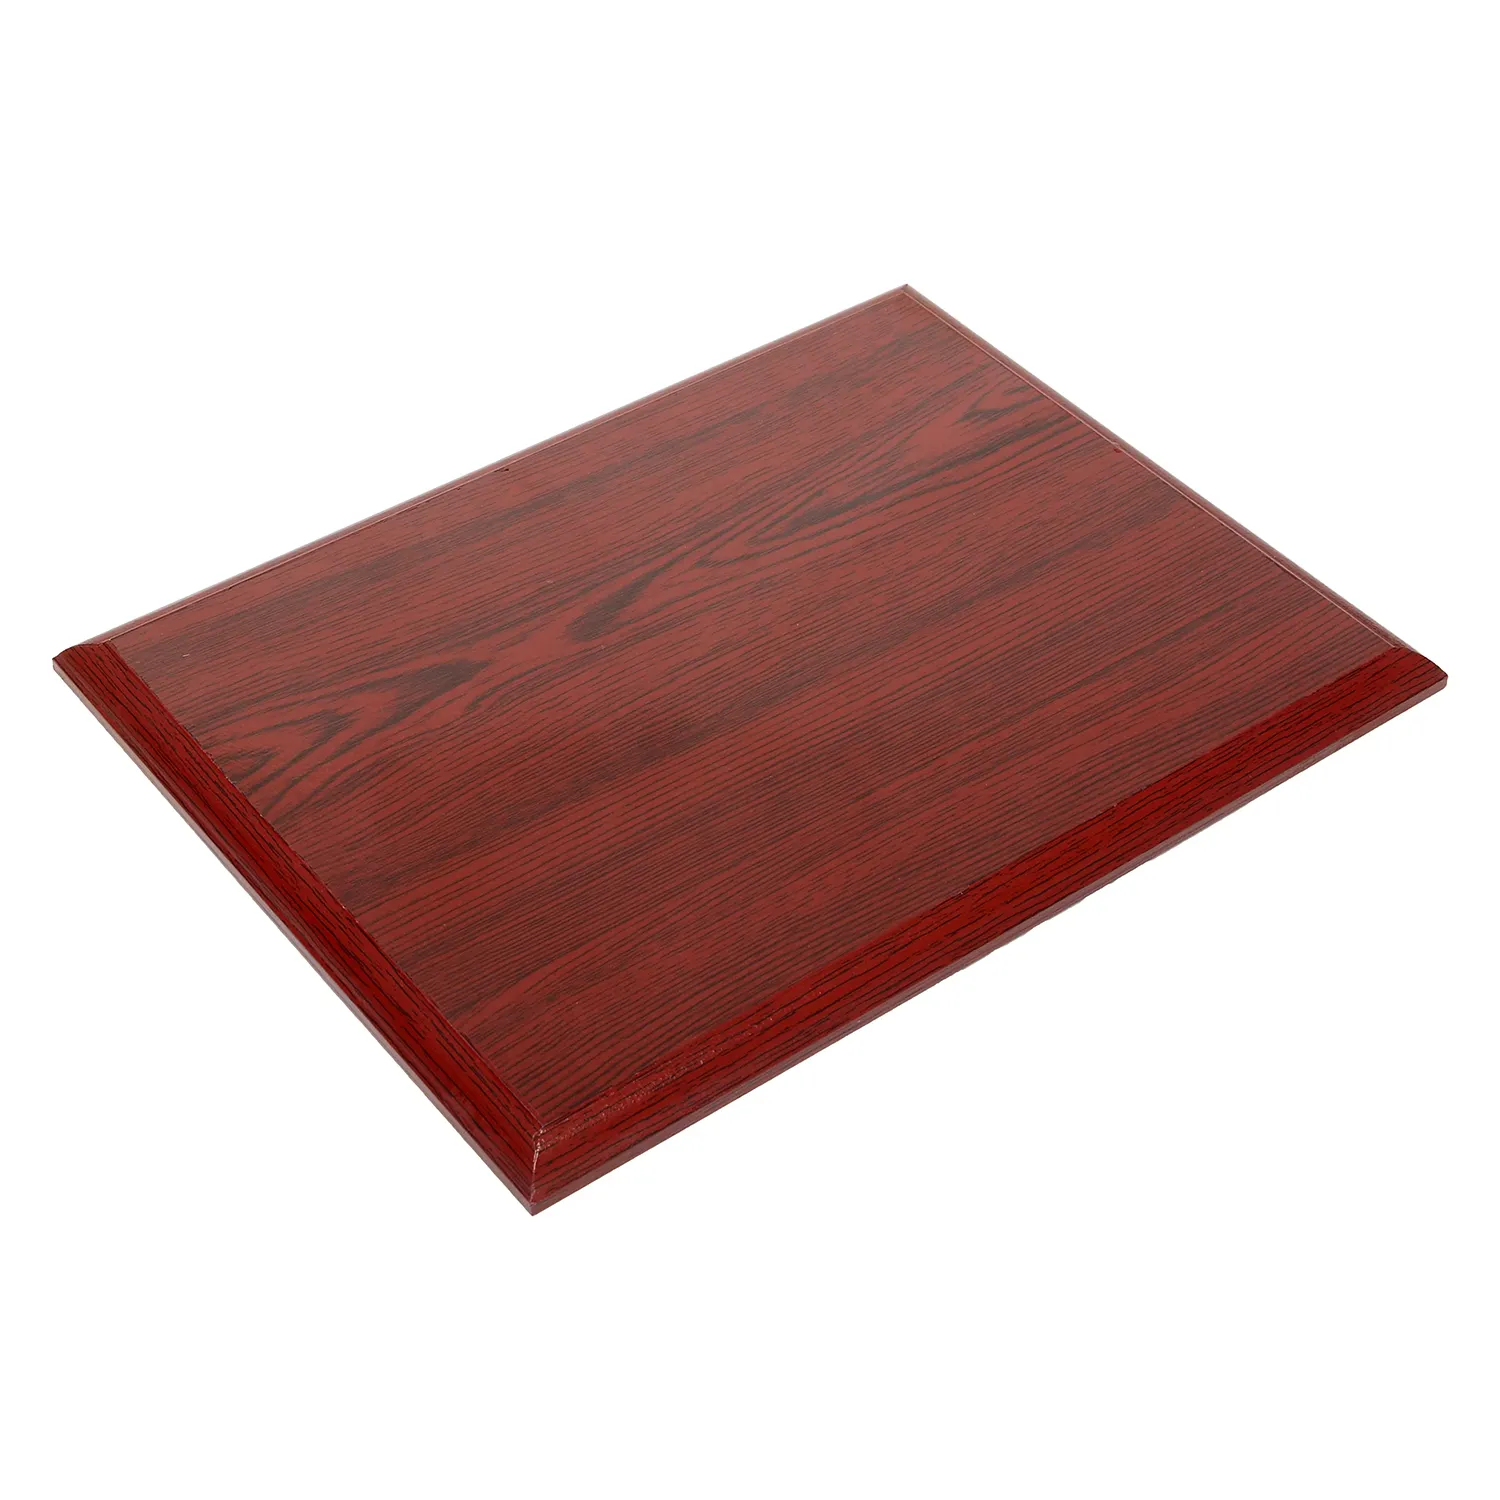 30 pcs Custom Großhandel Natürliche Aktivitäten Souvenir Unvollendete Blank Wood Plaques Boards Wooden Award Plaque Sublimation Craft